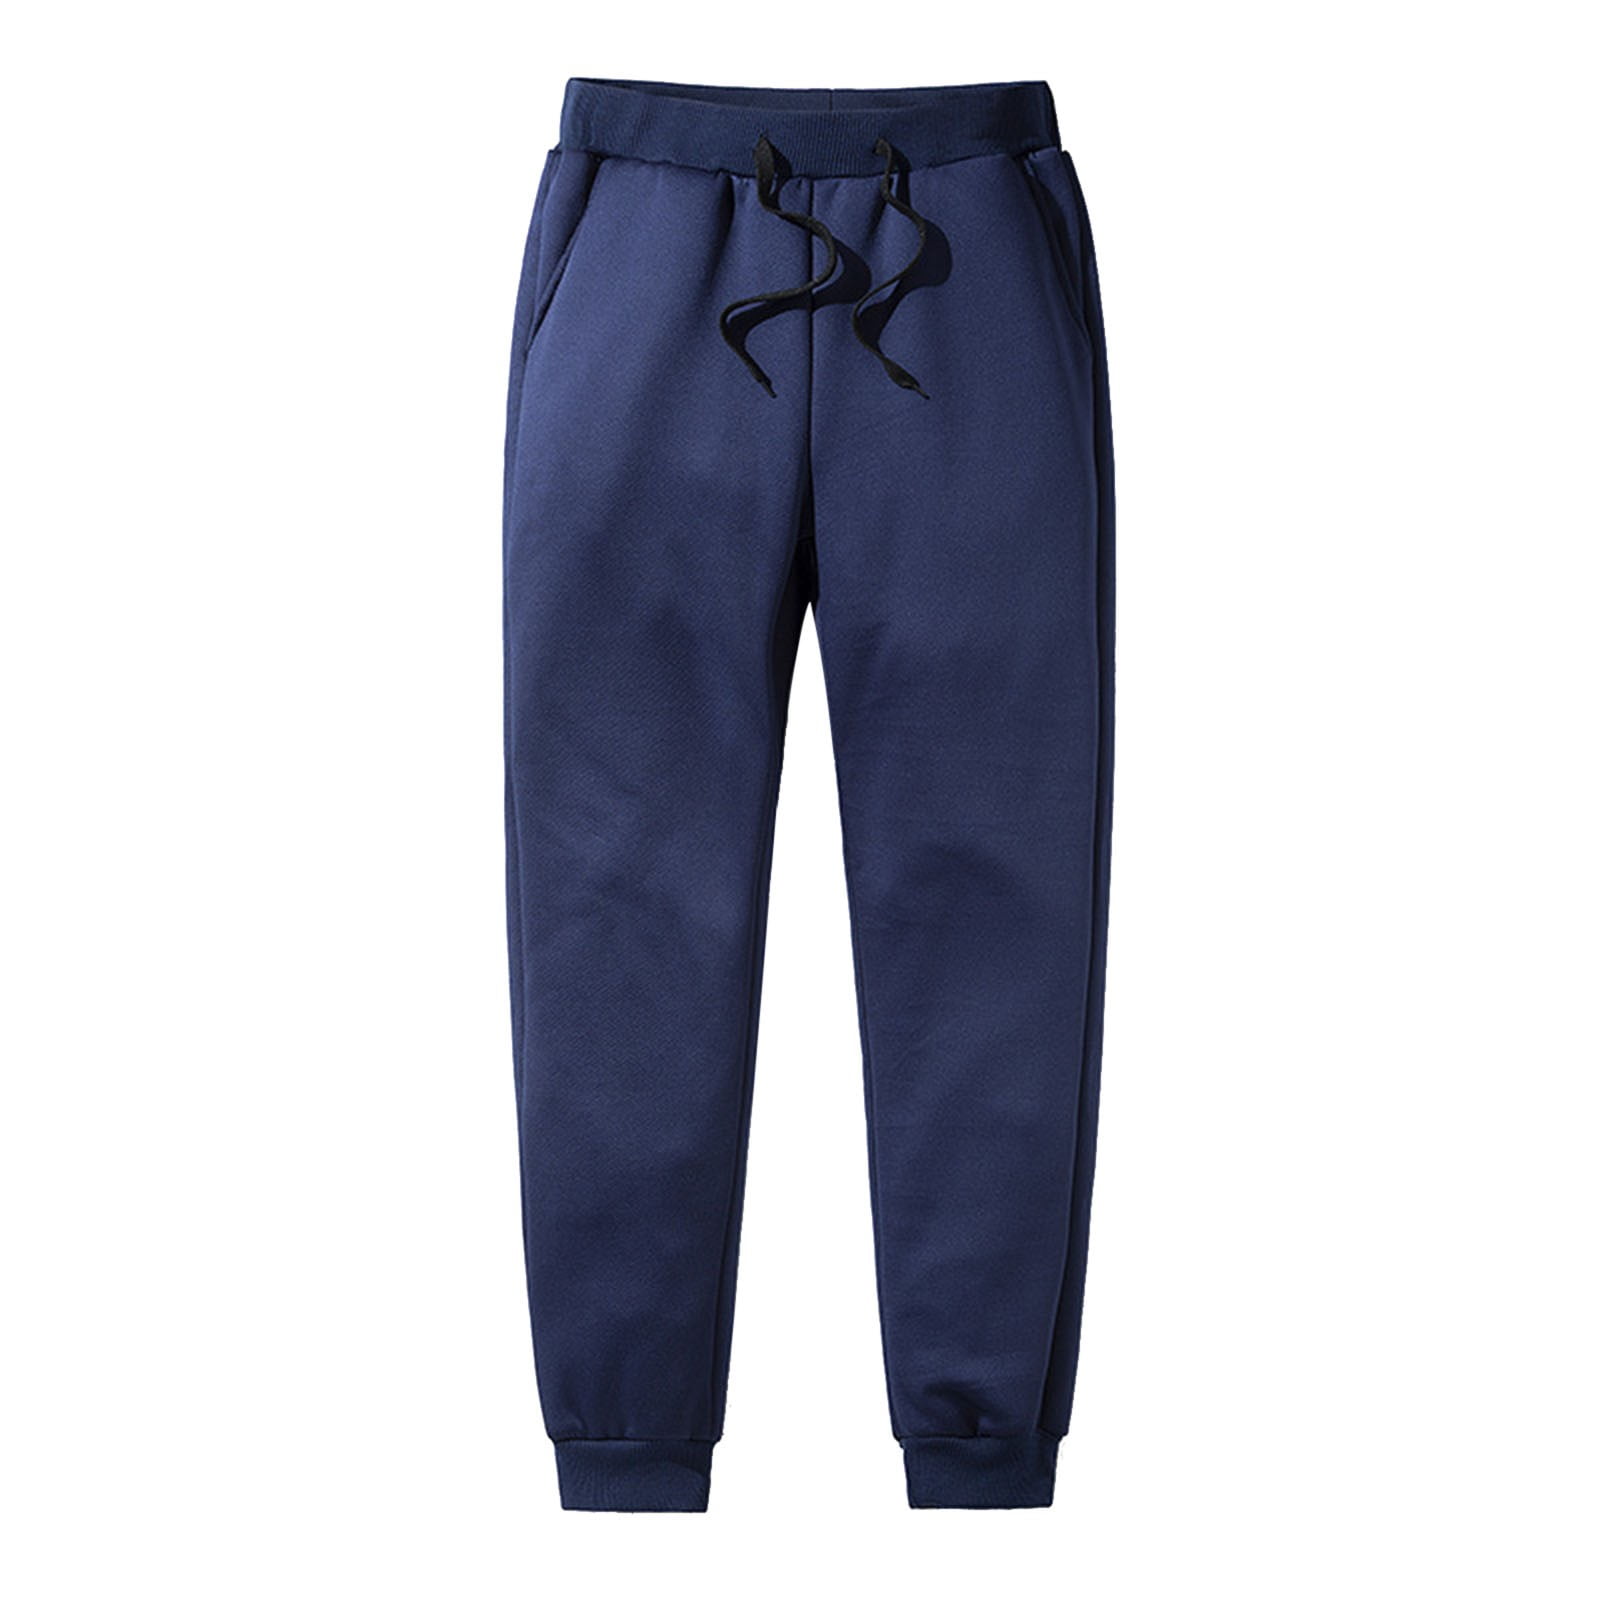 LEEy-world Sweatpants for Men Mens Jogger Sport Pants, Casual Zipper Gym  Workout Sweatpants Pockets Grey,XL 